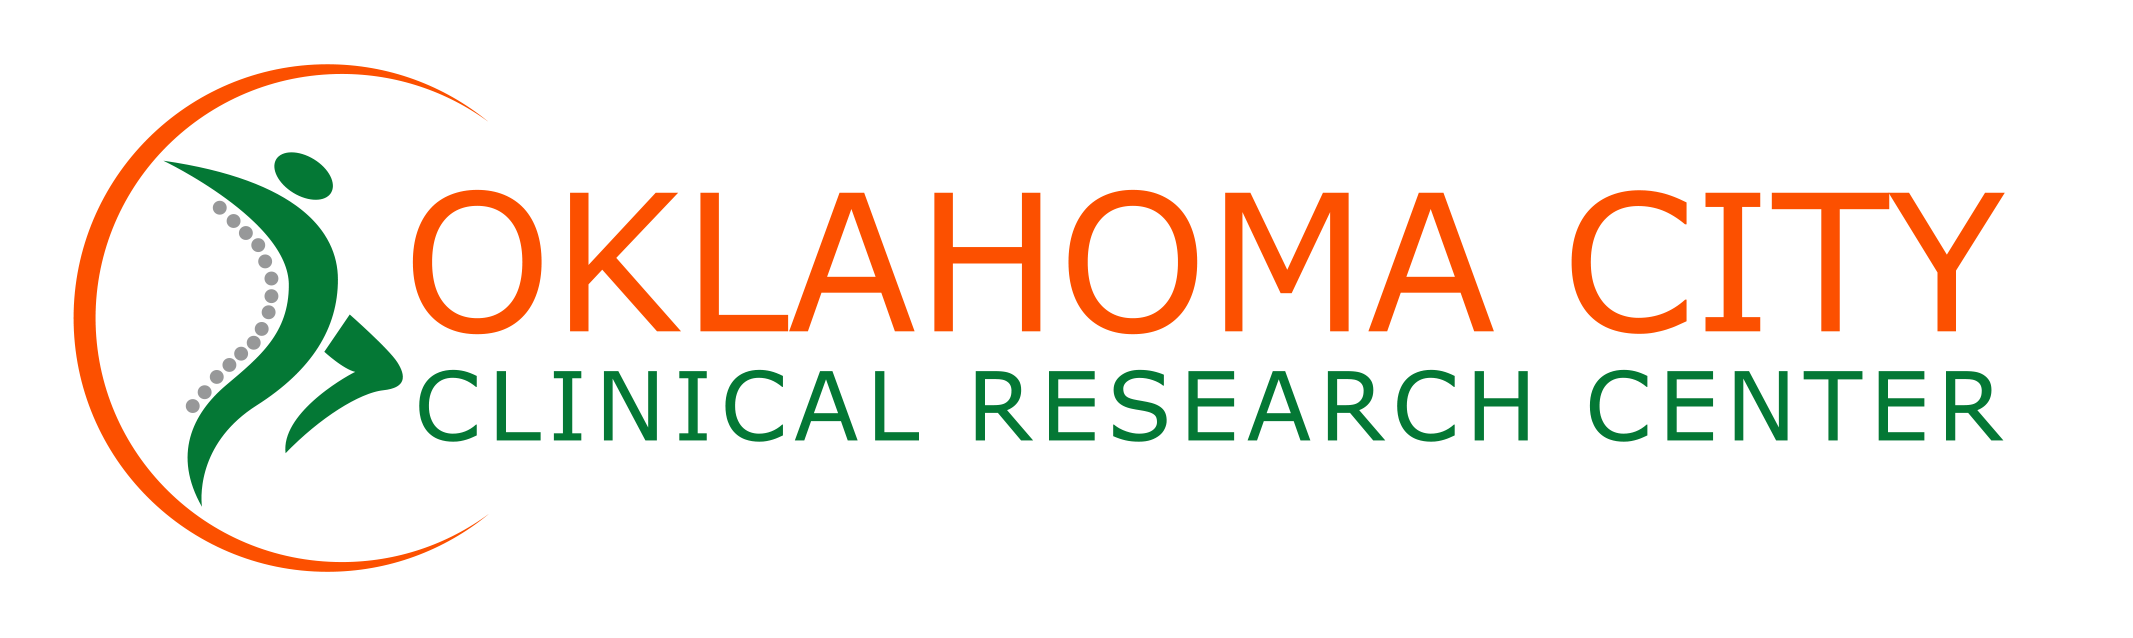 Oklahoma City Clinical Research Center logo